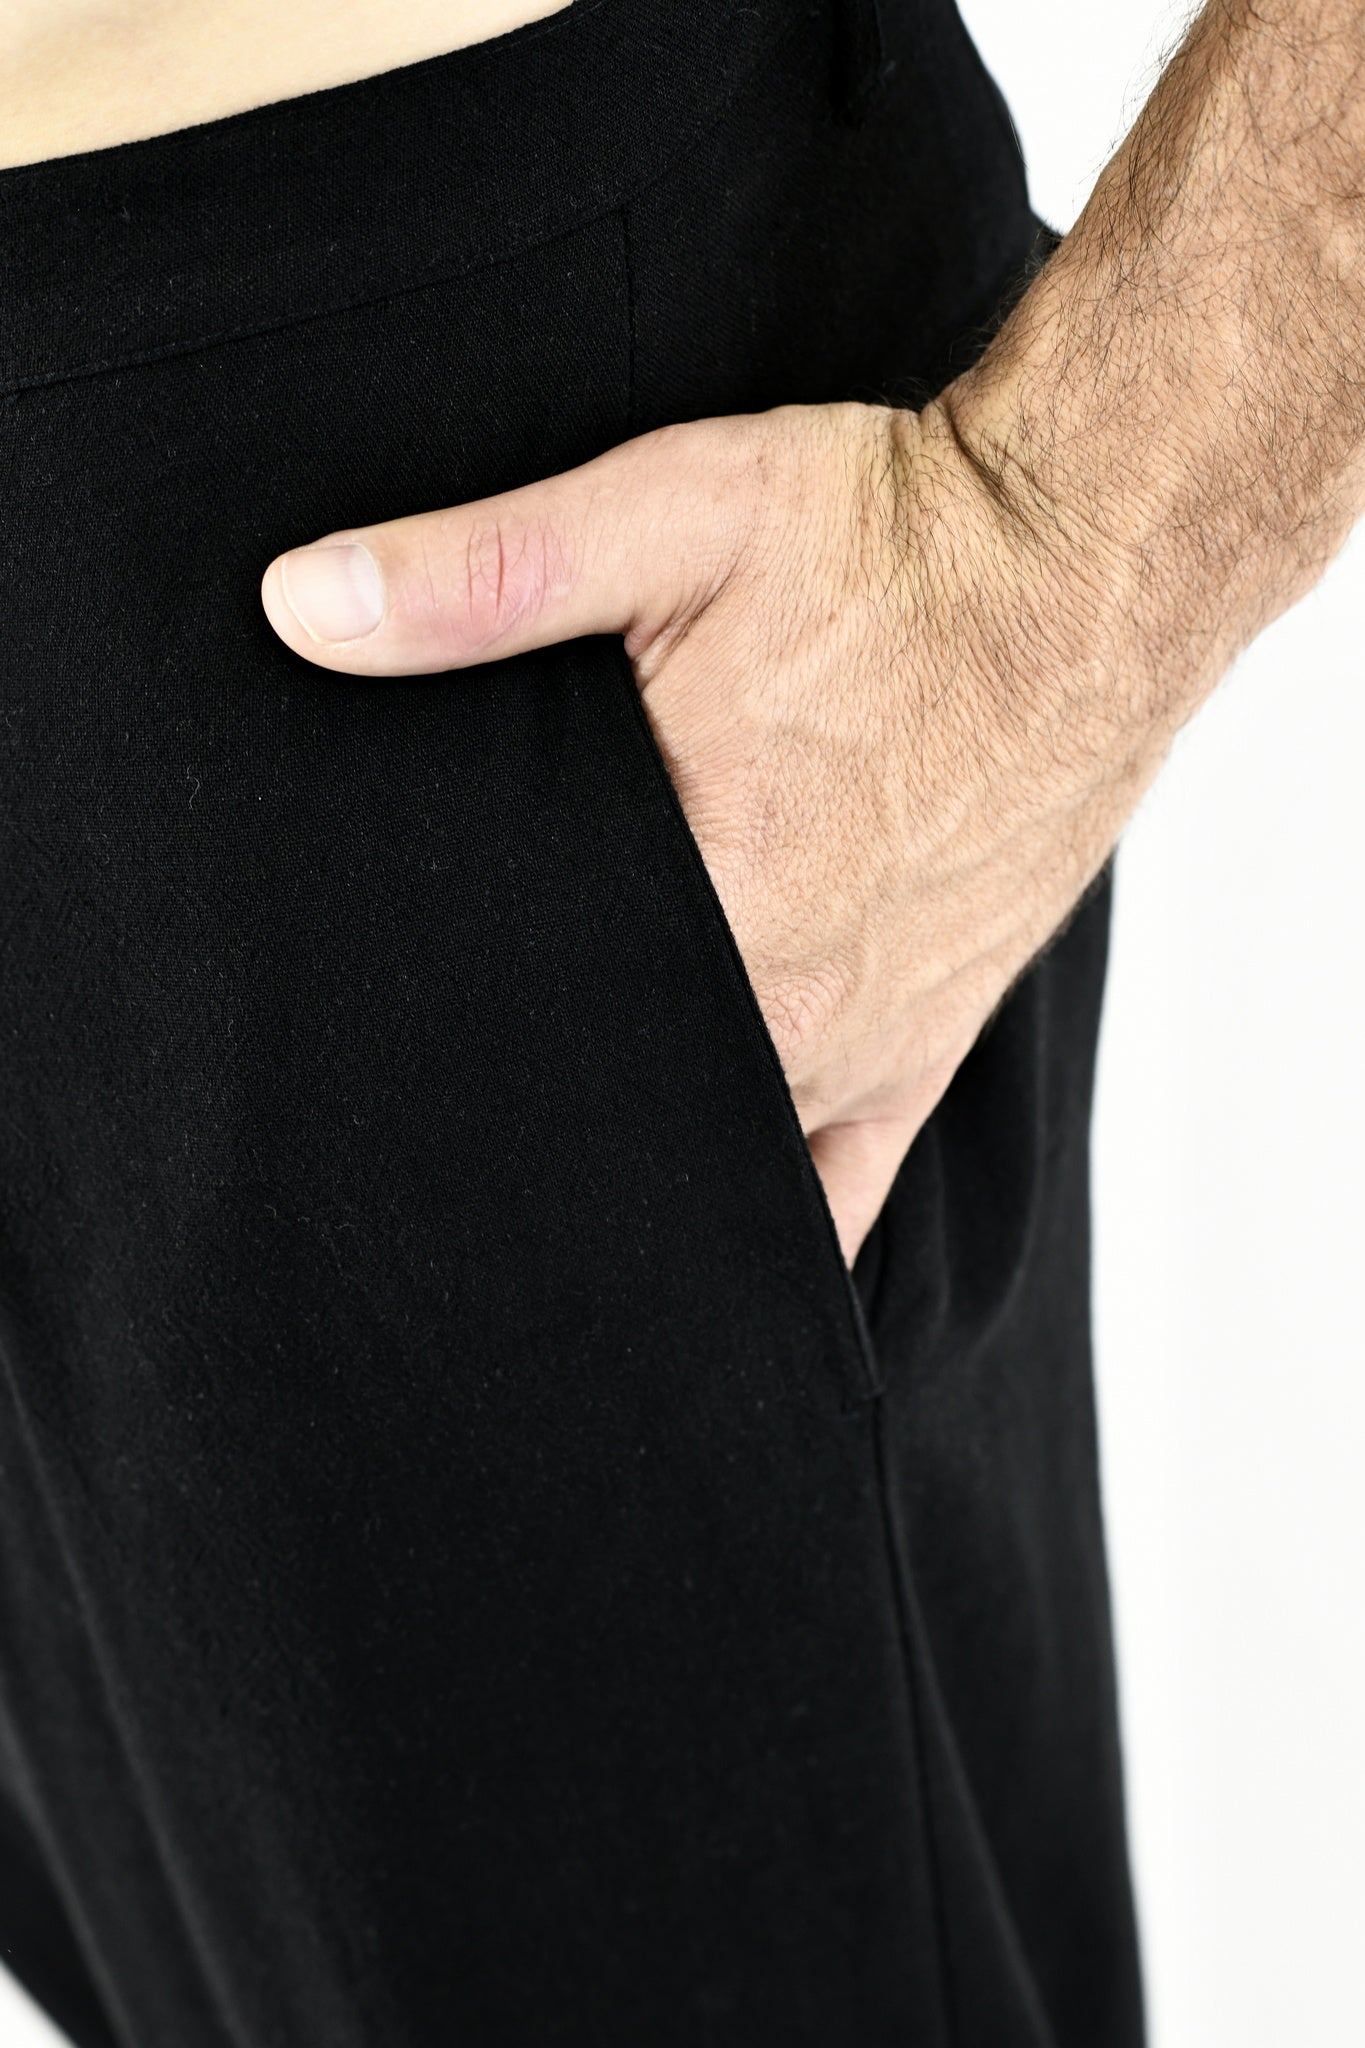 Menswear Black Relaxed Linen Blend Pants ZG5578